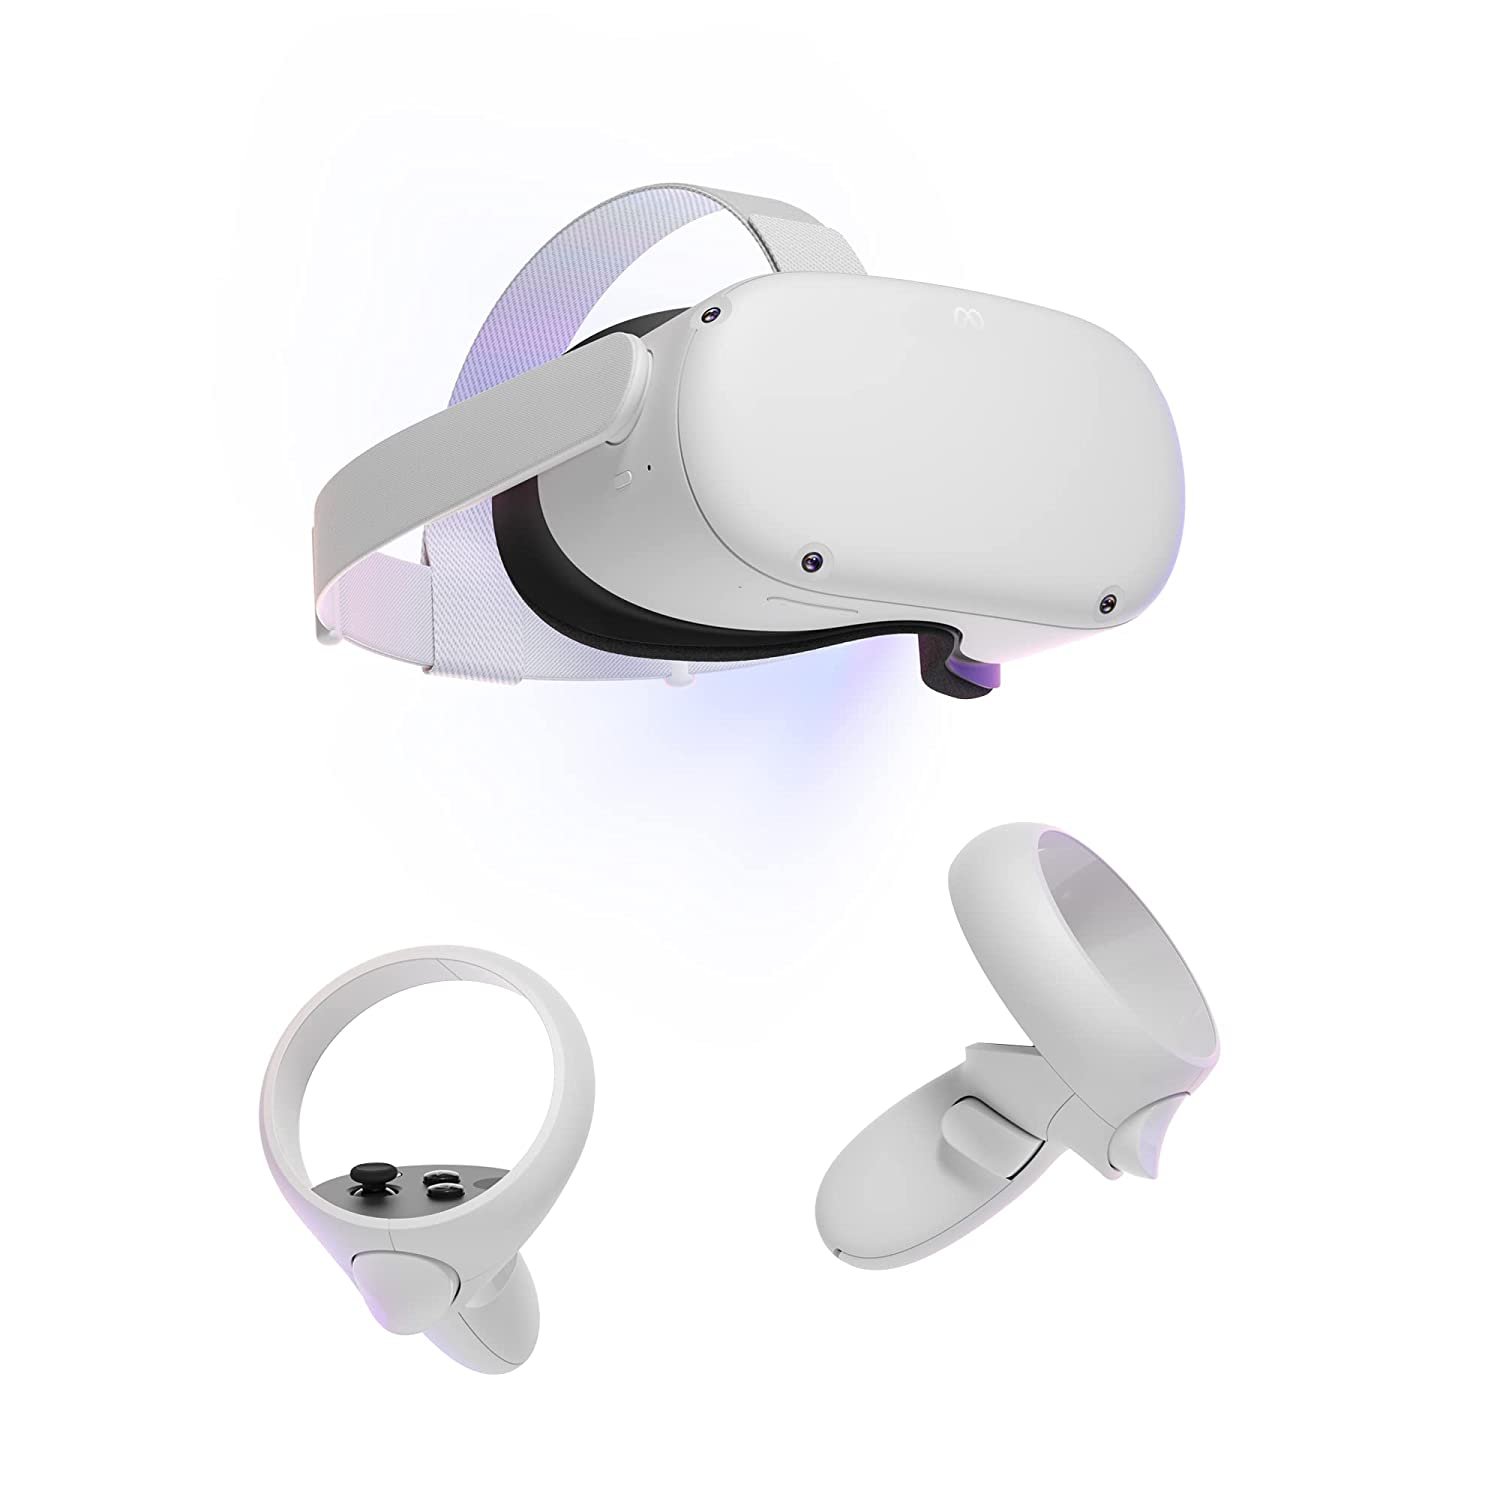 Meta Quest 2 - Virtual Reality Headset